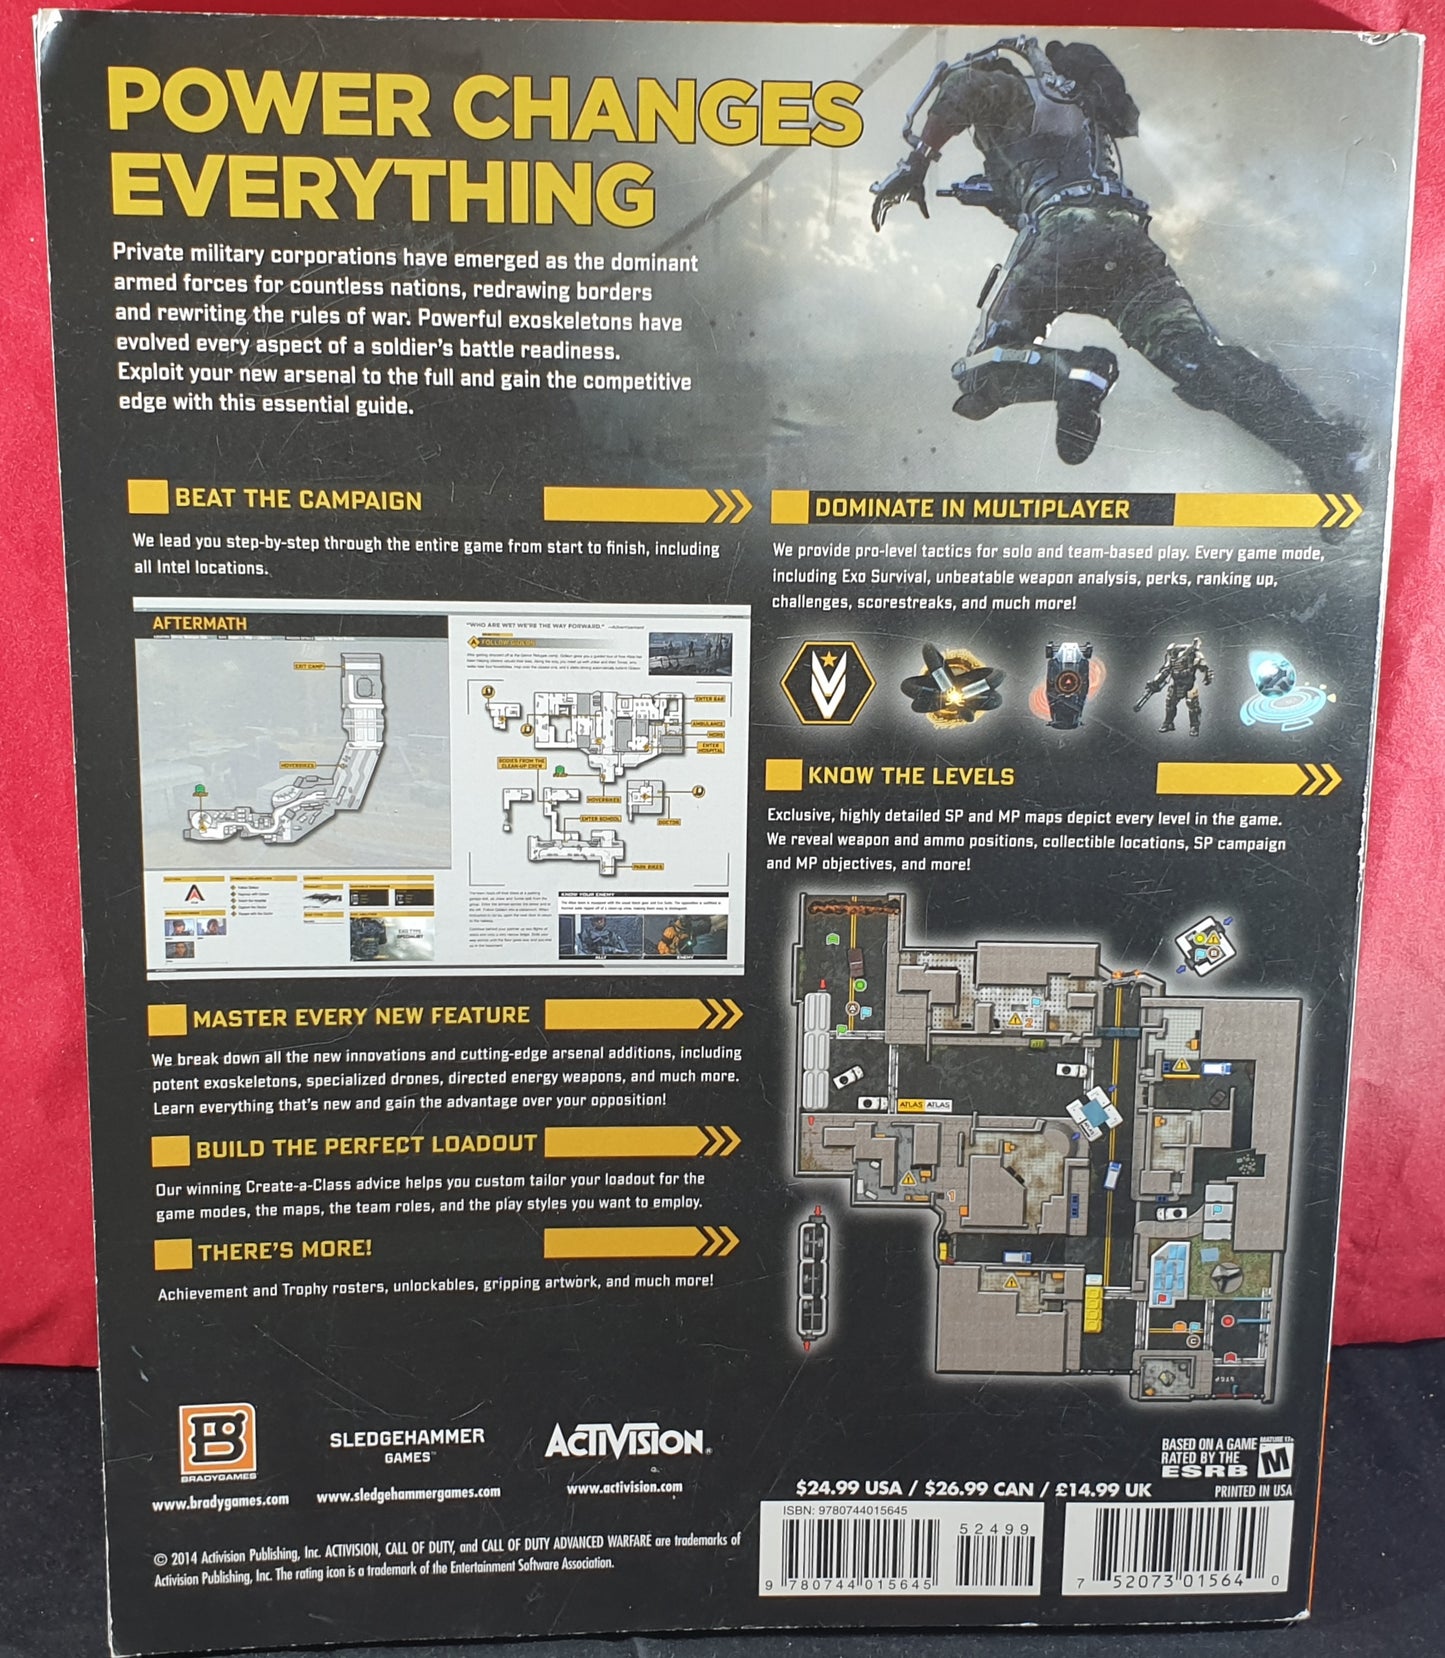 Call of Duty Advanced Warfare Strategy Guide Book